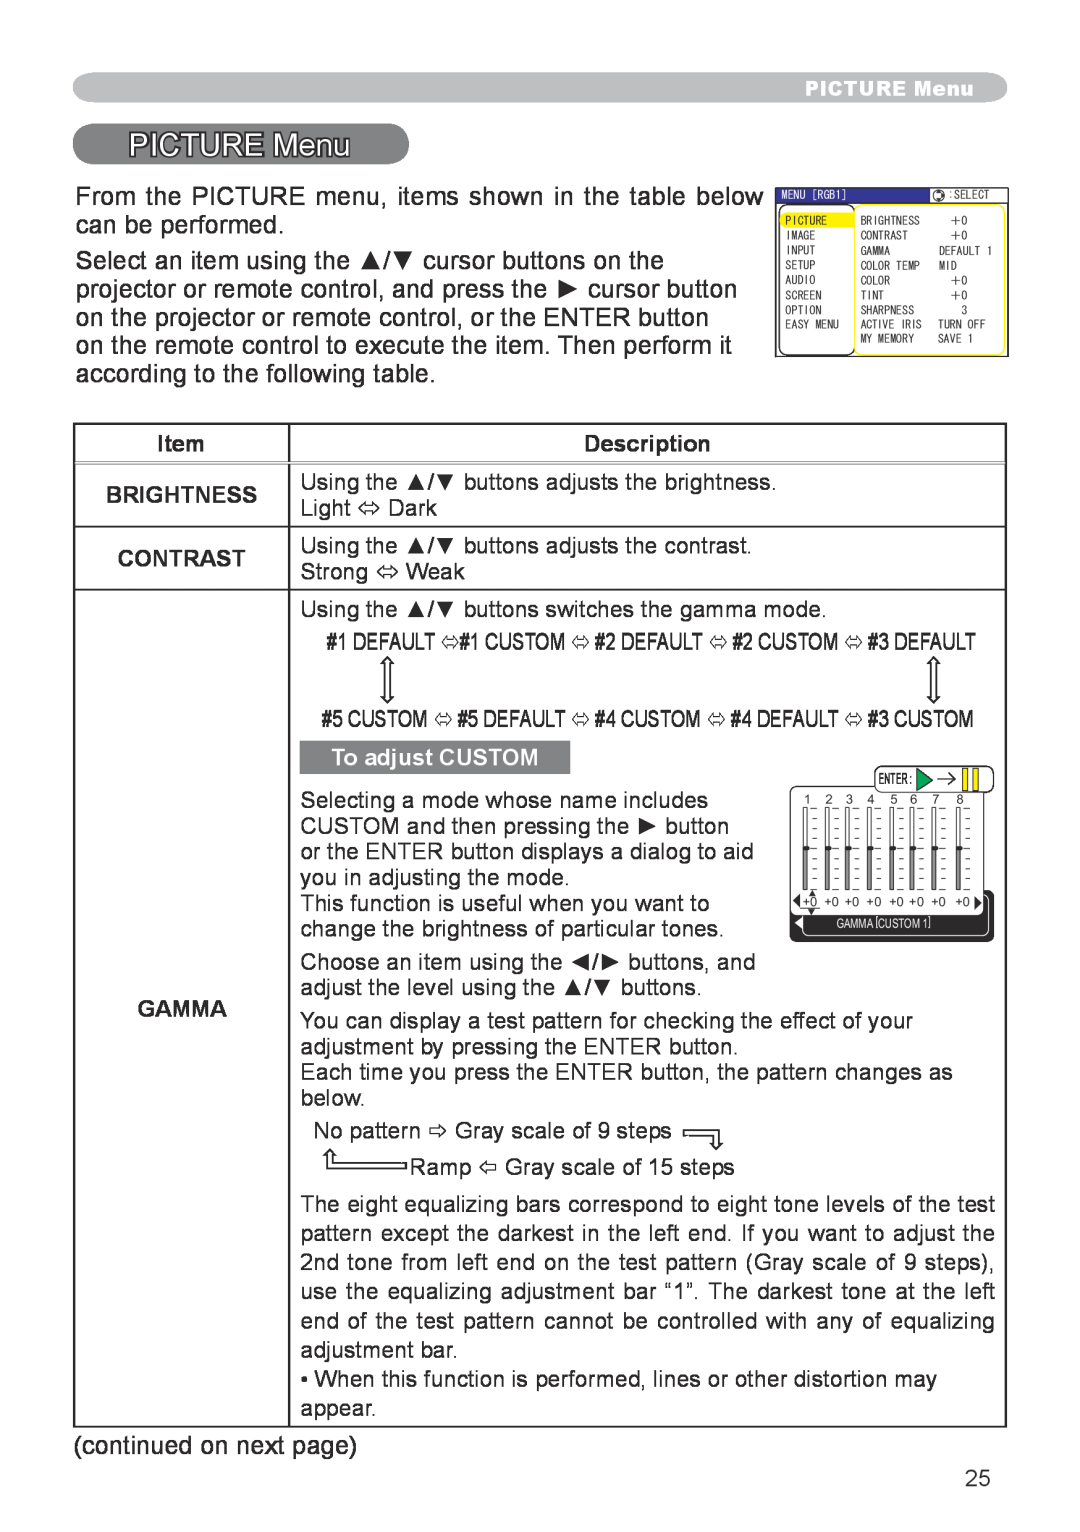 Hitachi CP-X600 user manual PICTURE Menu, Description, Brightness, Contrast, To adjust CUSTOM, Gamma 